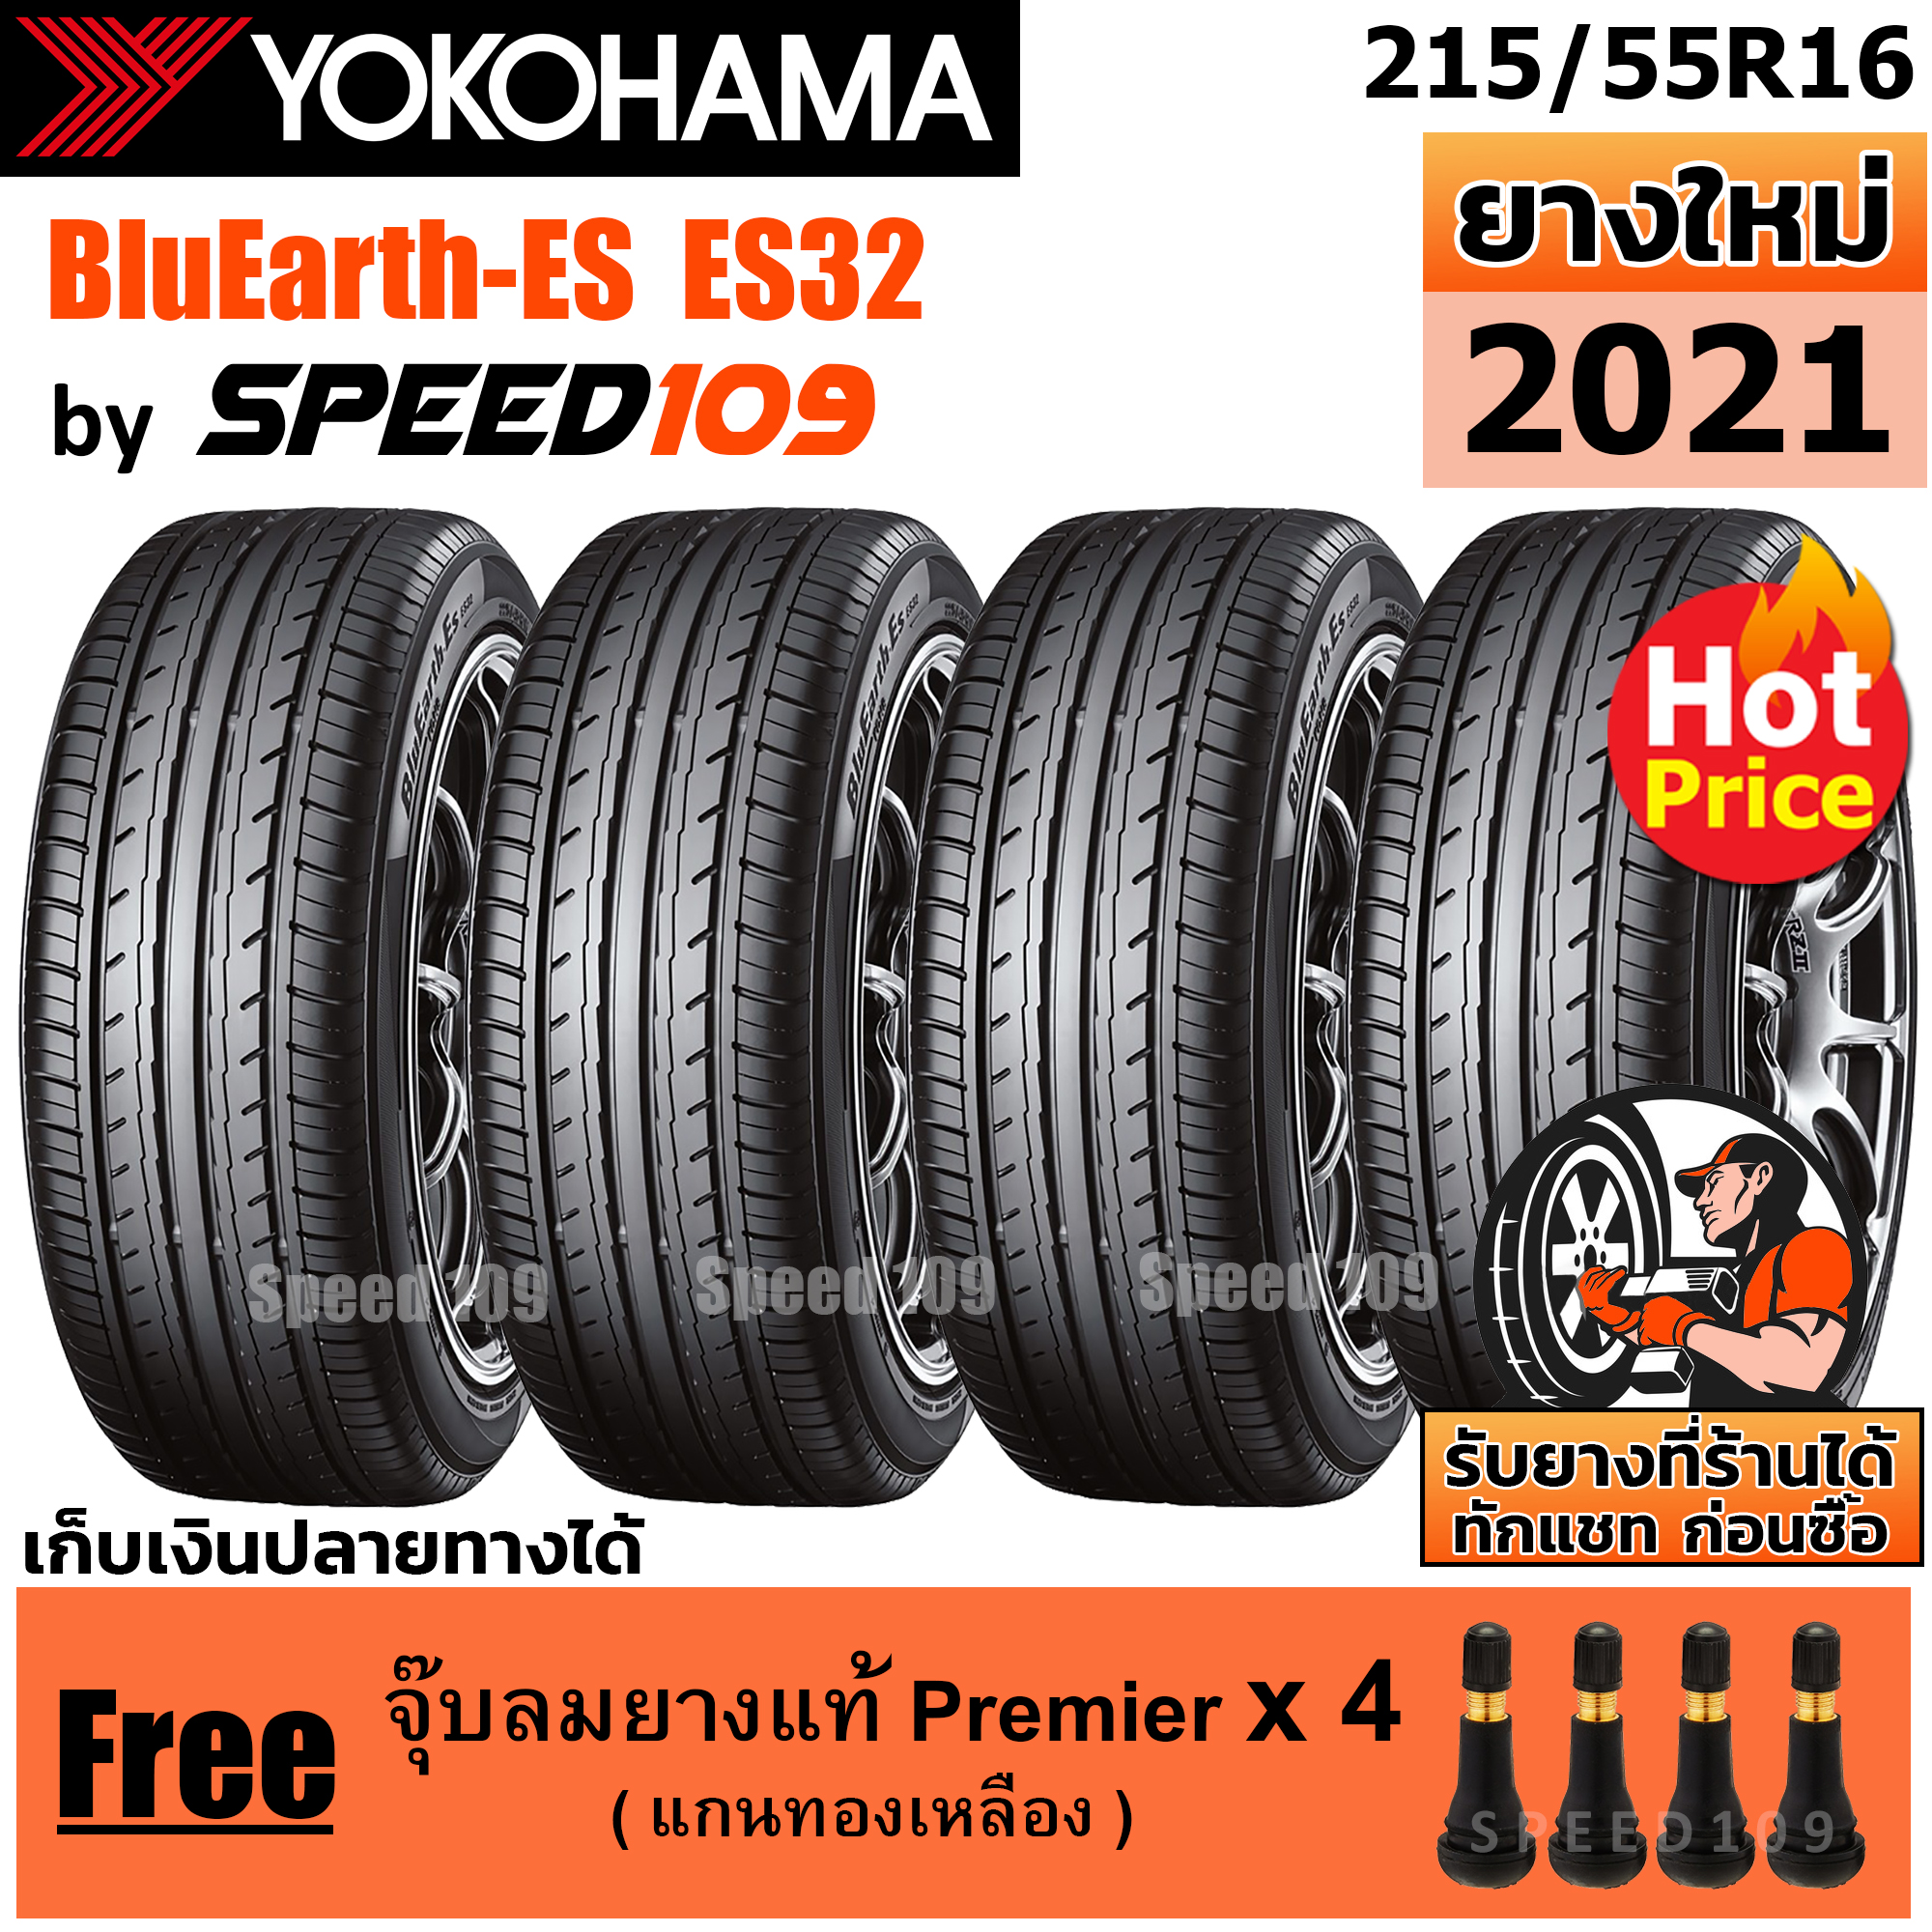 YOKOHAMA ยางรถยนต์ ขอบ 16 ขนาด 215/55R16 รุ่น BluEarth-ES ES32 - 4 เส้น (ปี 2021)